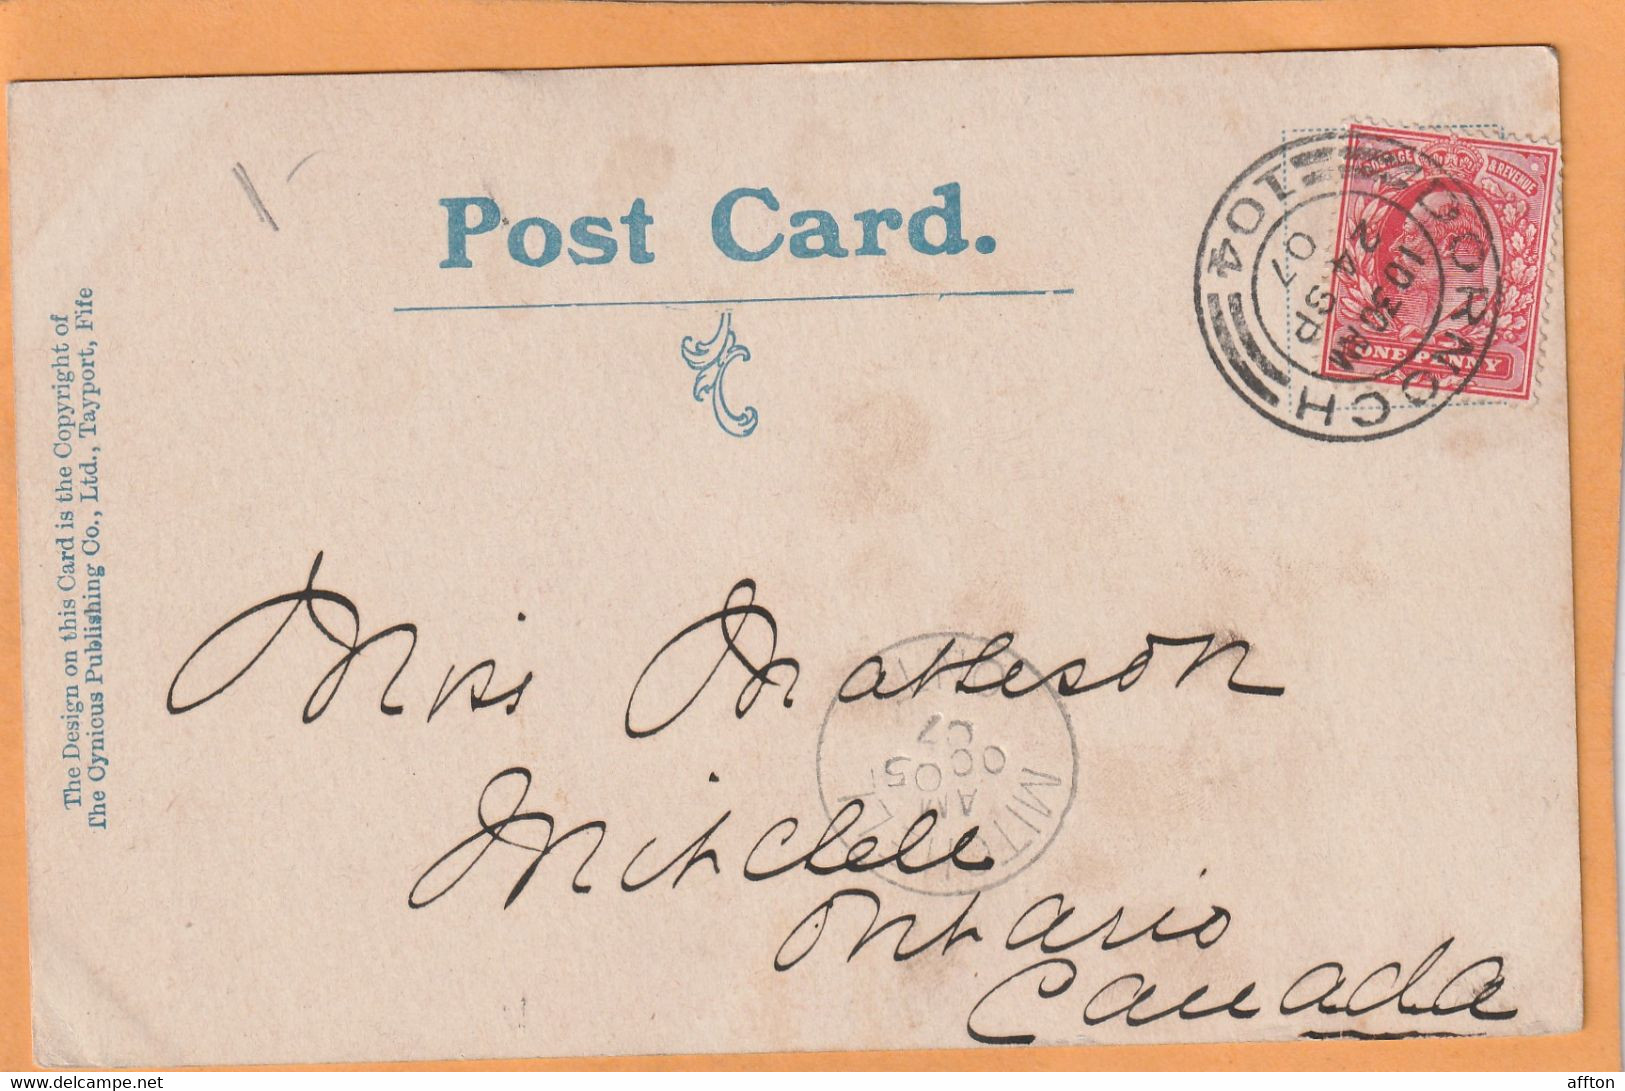 Dornoch UK 1907 Postcard - Caithness